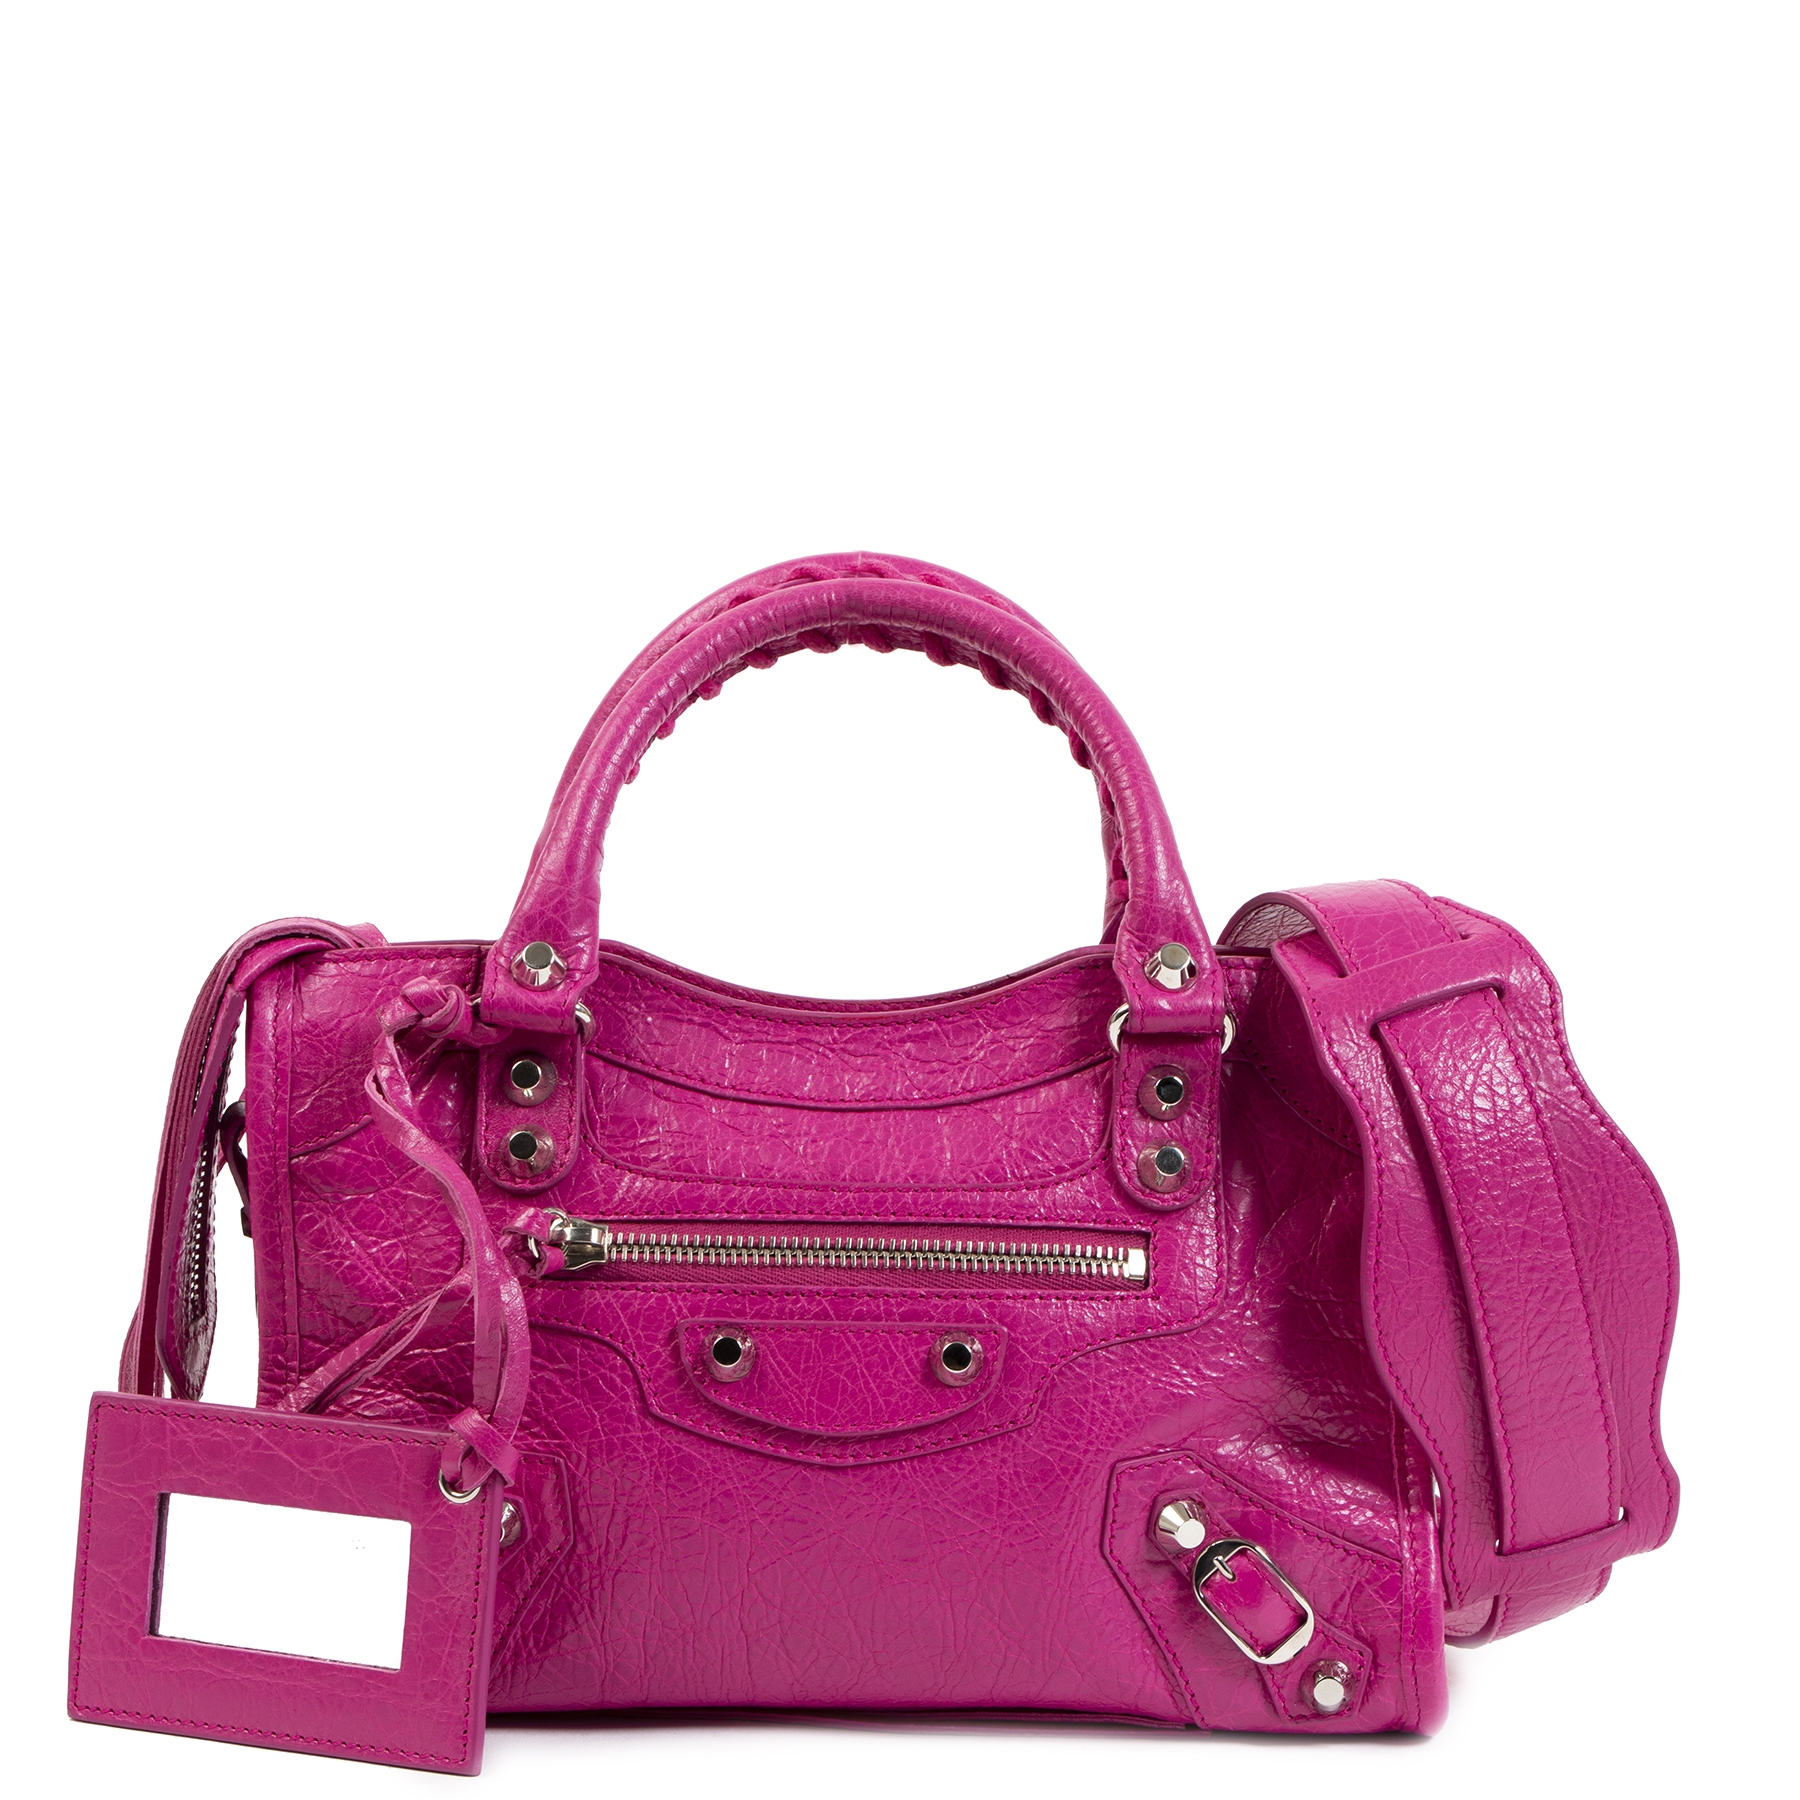 Balenciaga Light Pink Leather City Classic Medium Bag  I MISS YOU VINTAGE